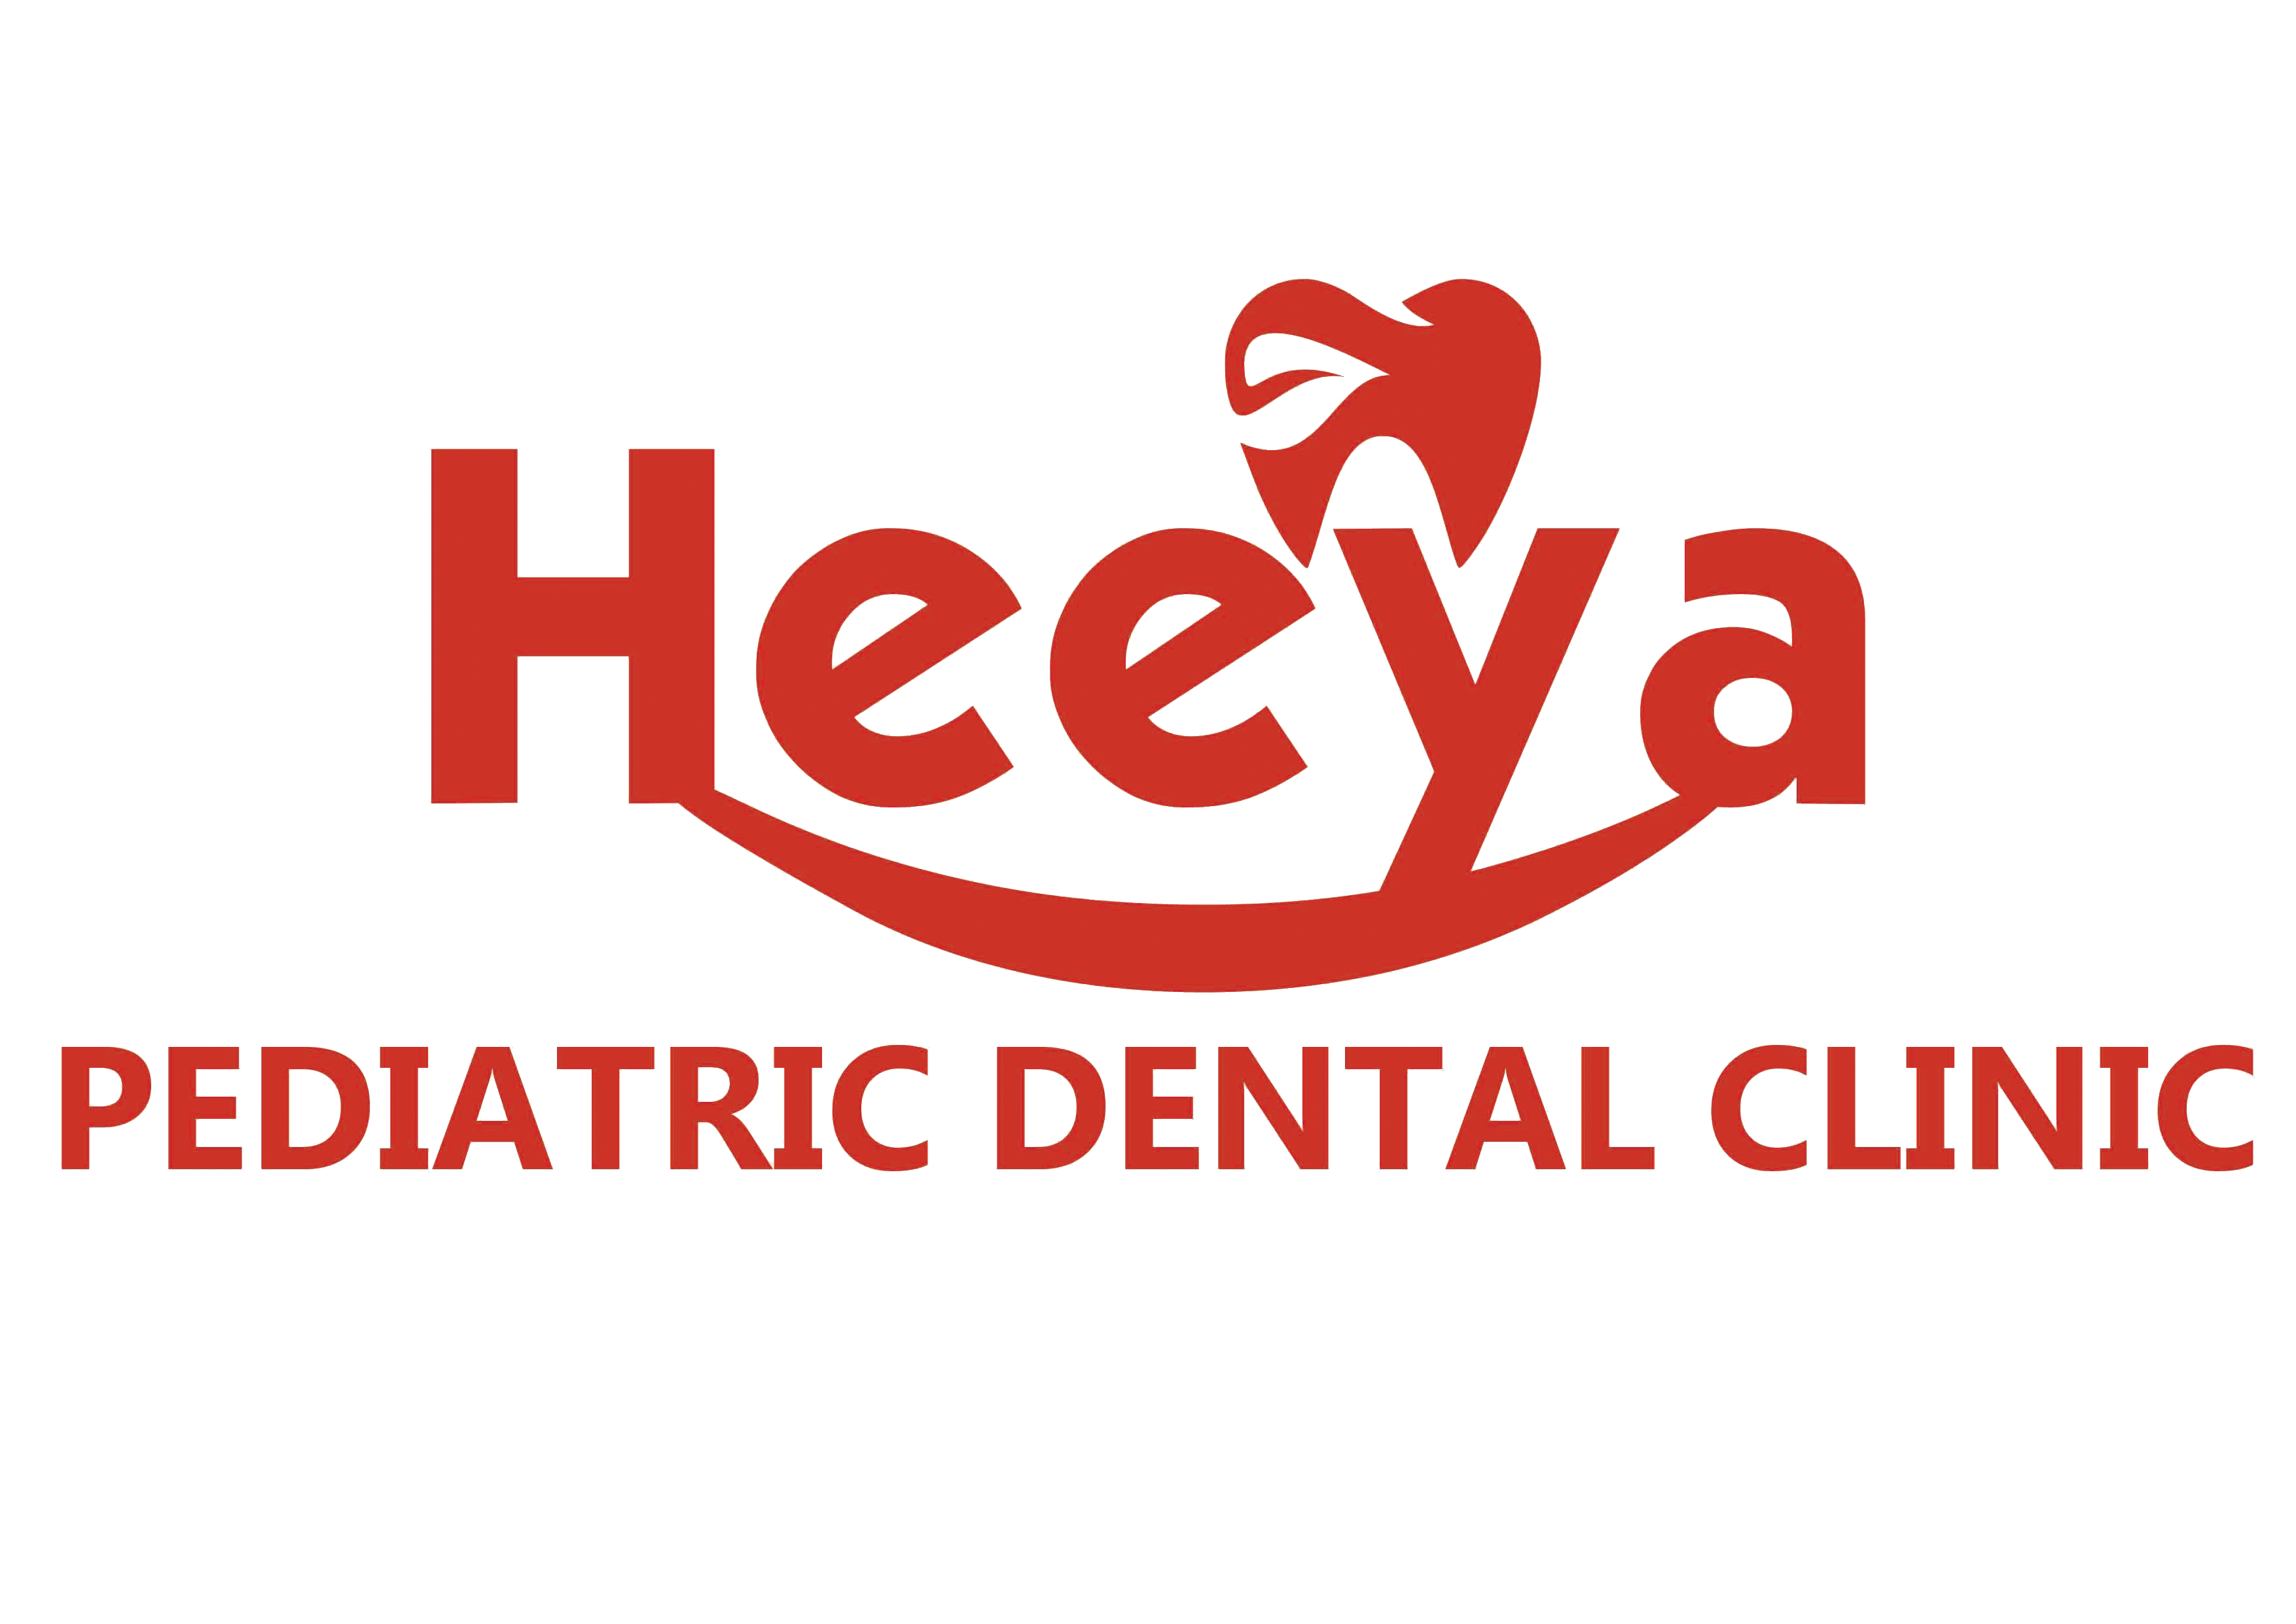 Heeya Pediatric Dental Clinic|Diagnostic centre|Medical Services